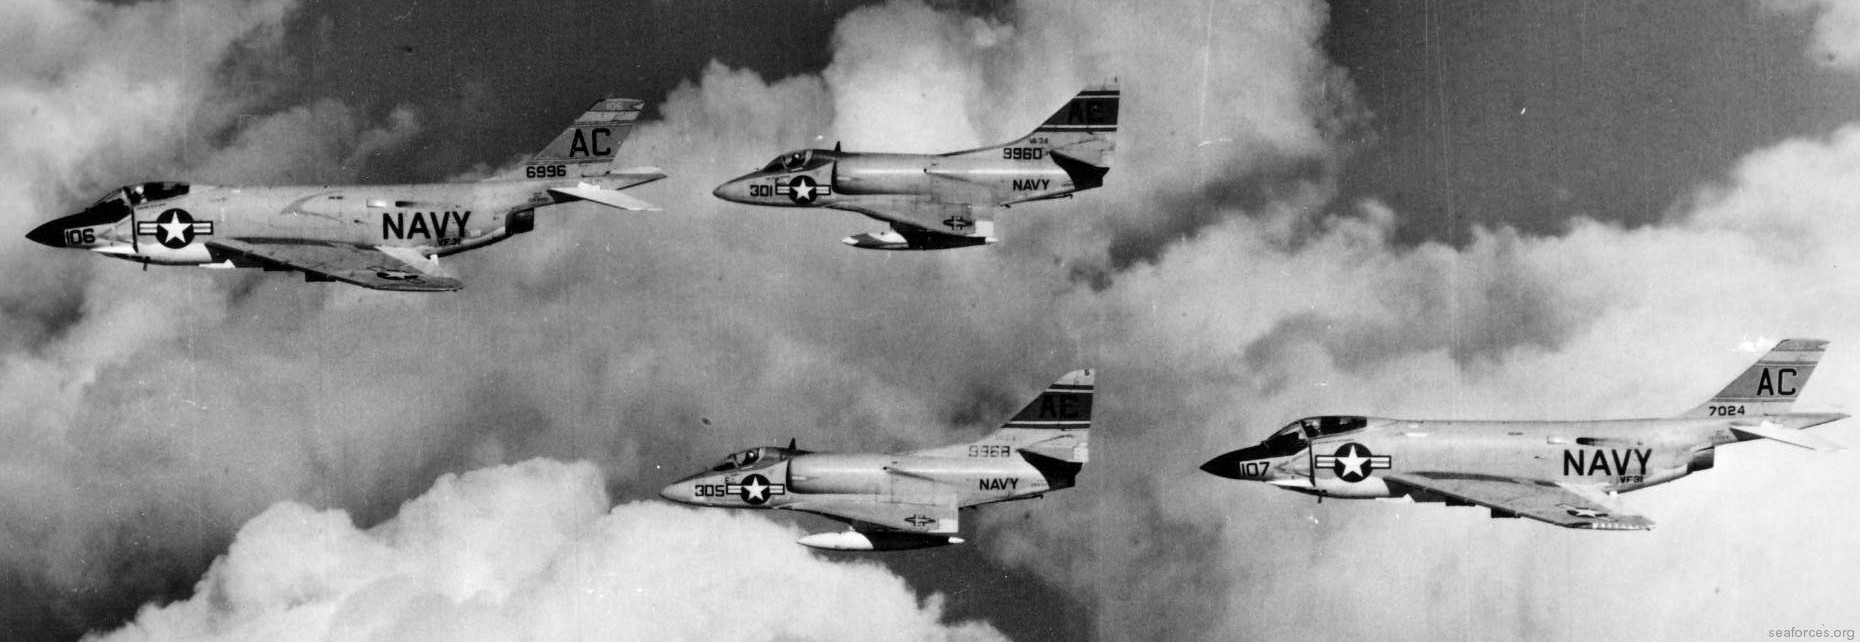 vf-31 tomcatters fighter squadron navy f3h-2n demon cvg-3 uss saratoga cva-60 142